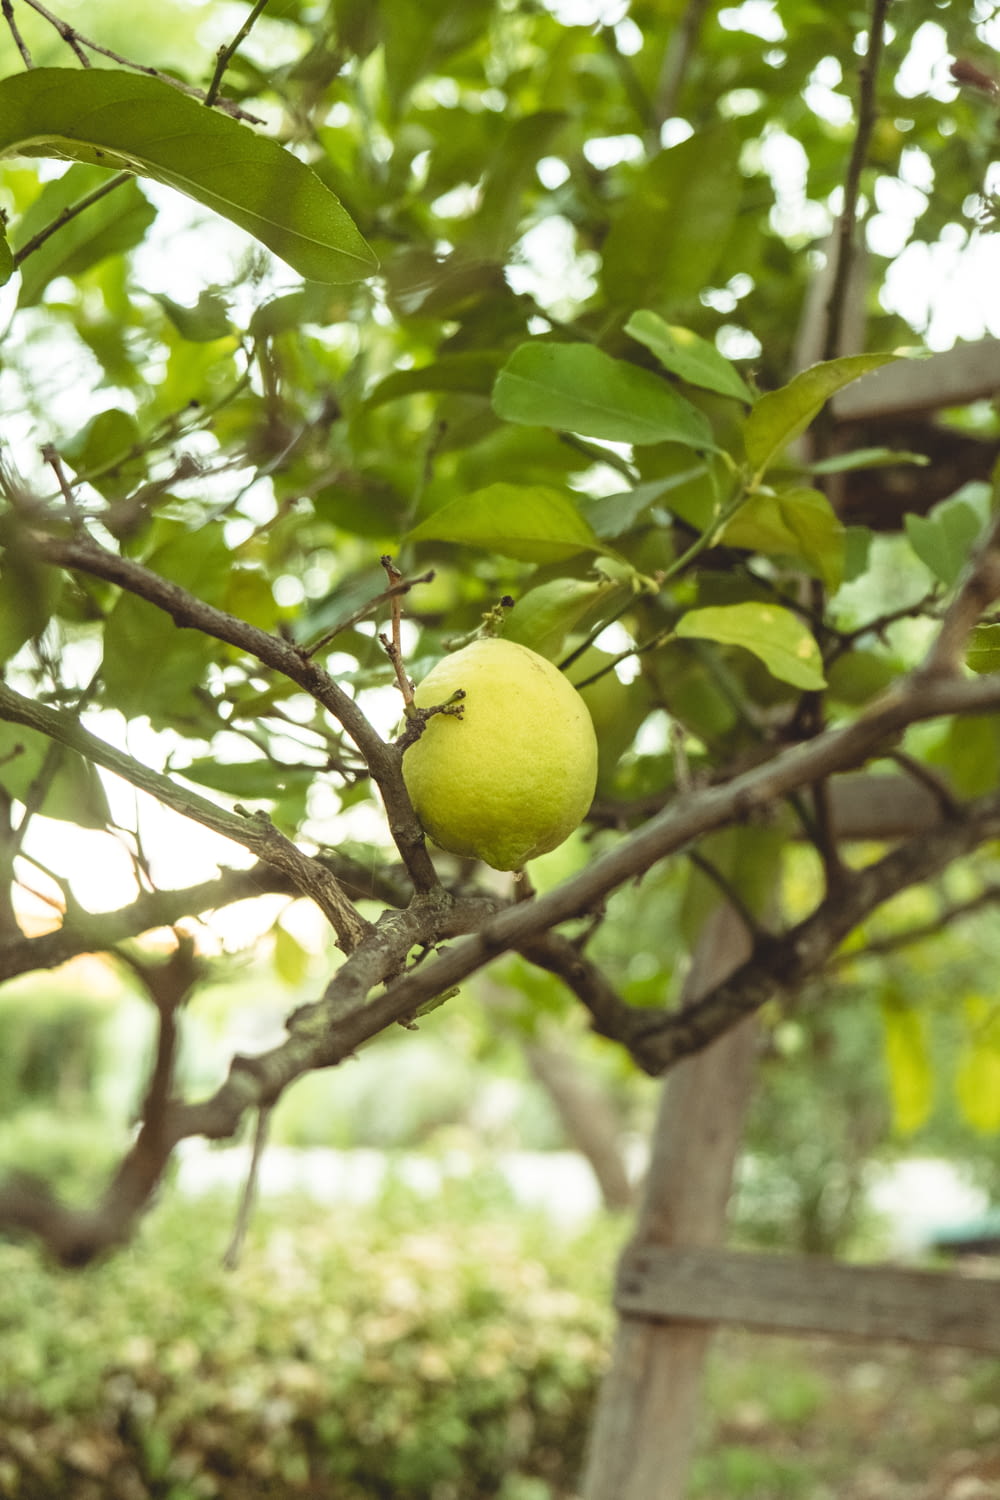 yellow lemon fruit on tree branch